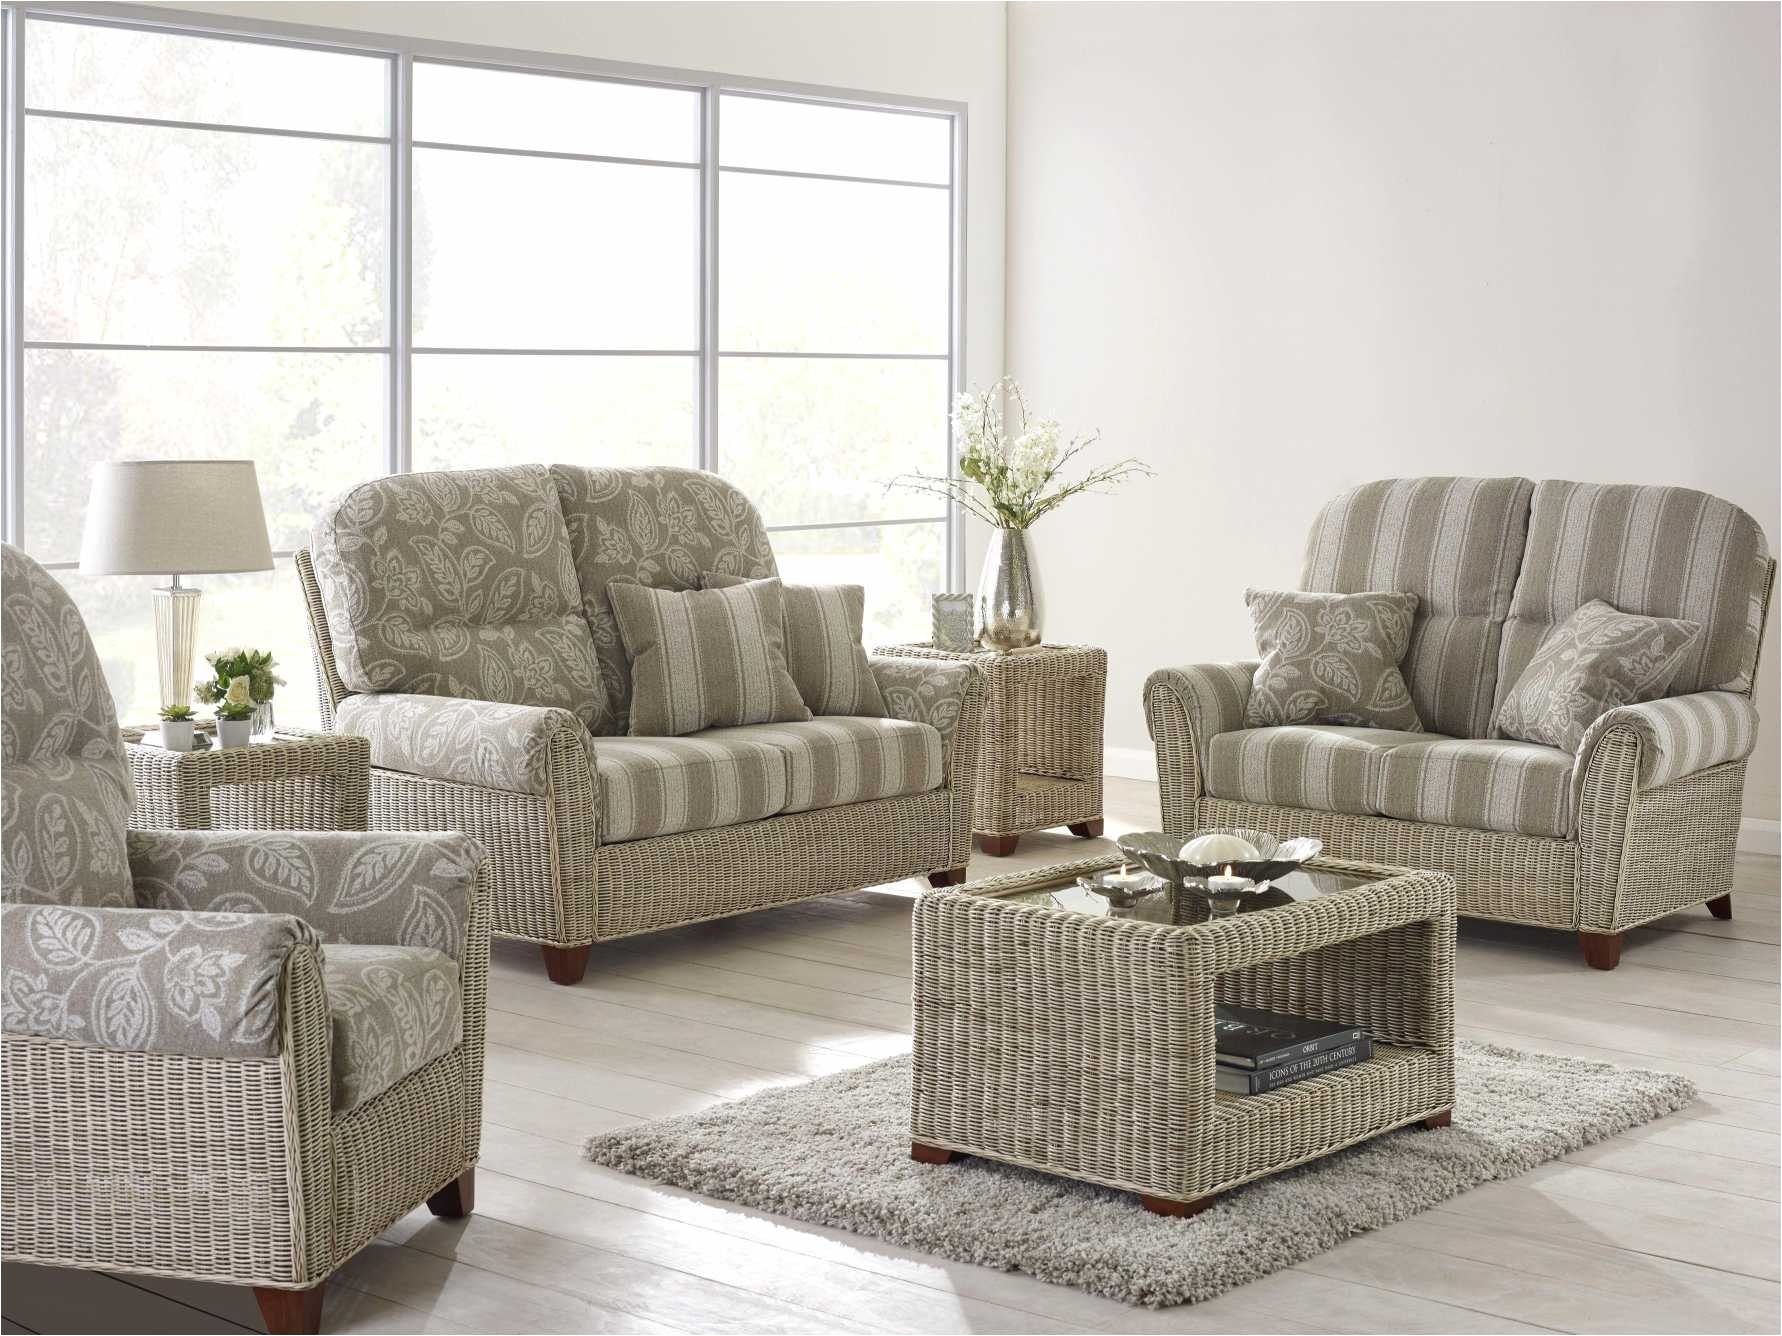 Inspiring Modern Living Room Seating Valid Living Room Furniture Contemporary Design Elegant Shaker Chairs 0d